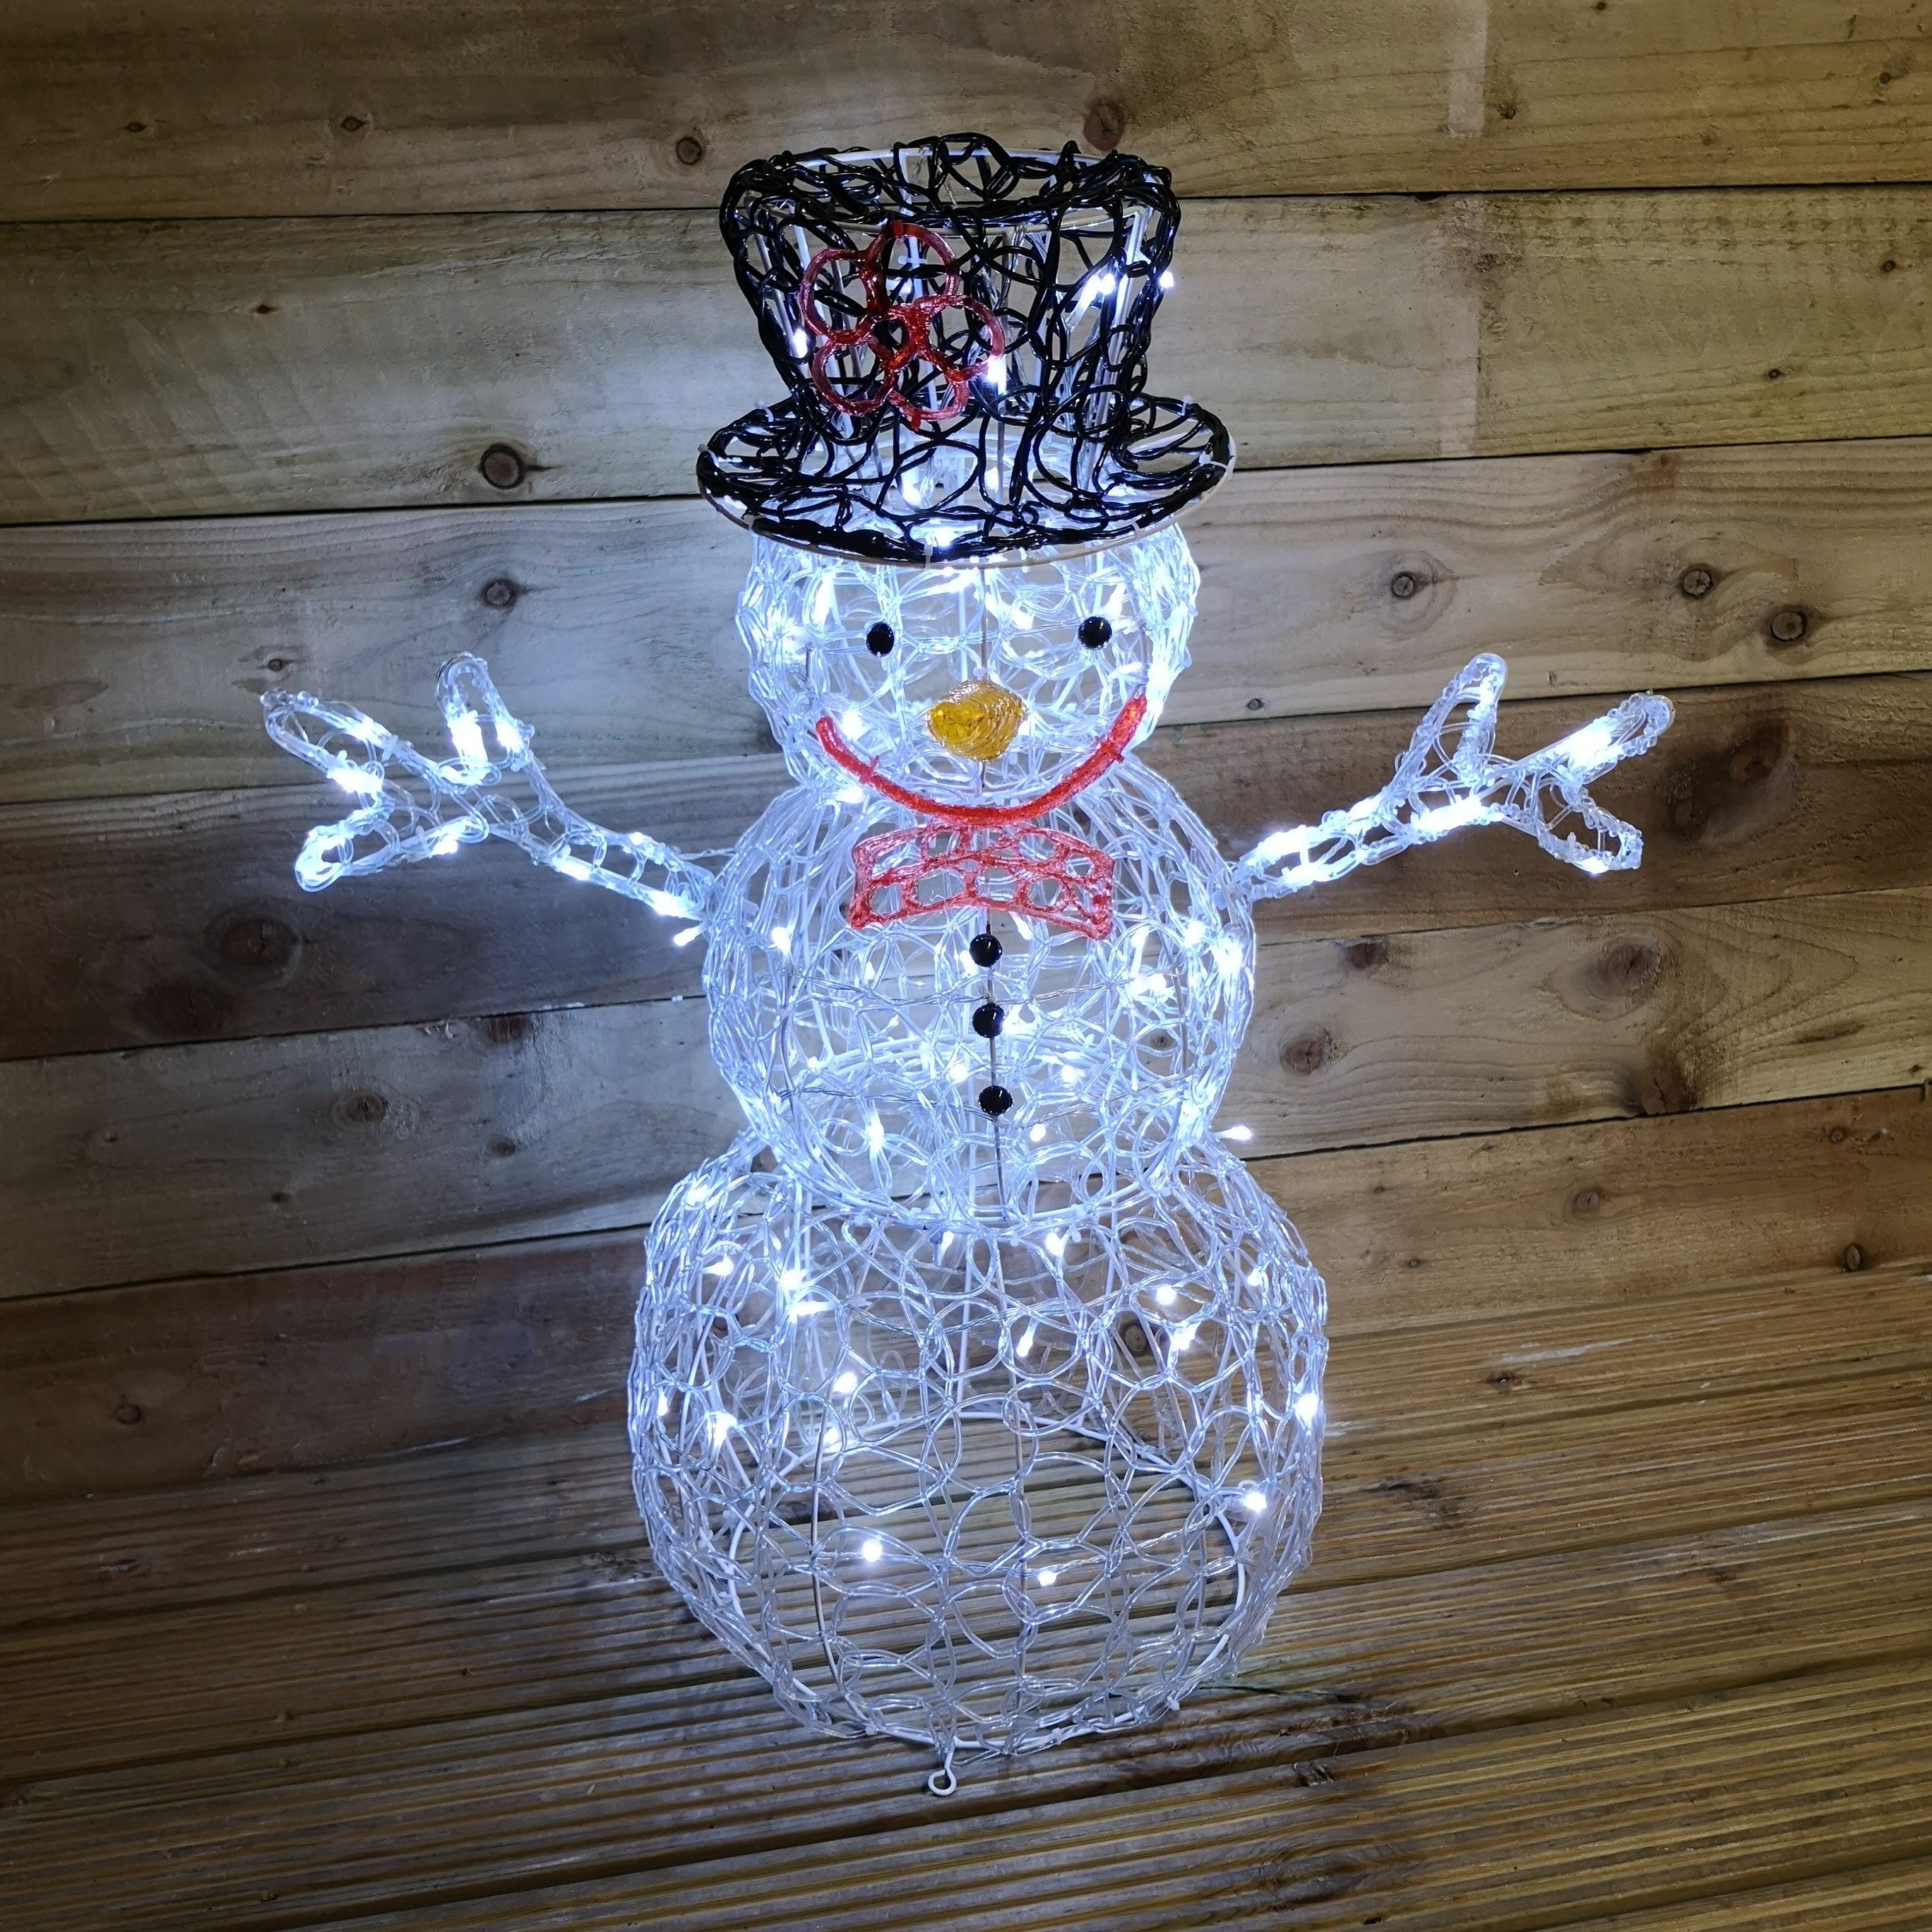 76cm Premier Indoor / Outdoor Acrylic Snowman Christmas Decoration 88 Cool White LEDs